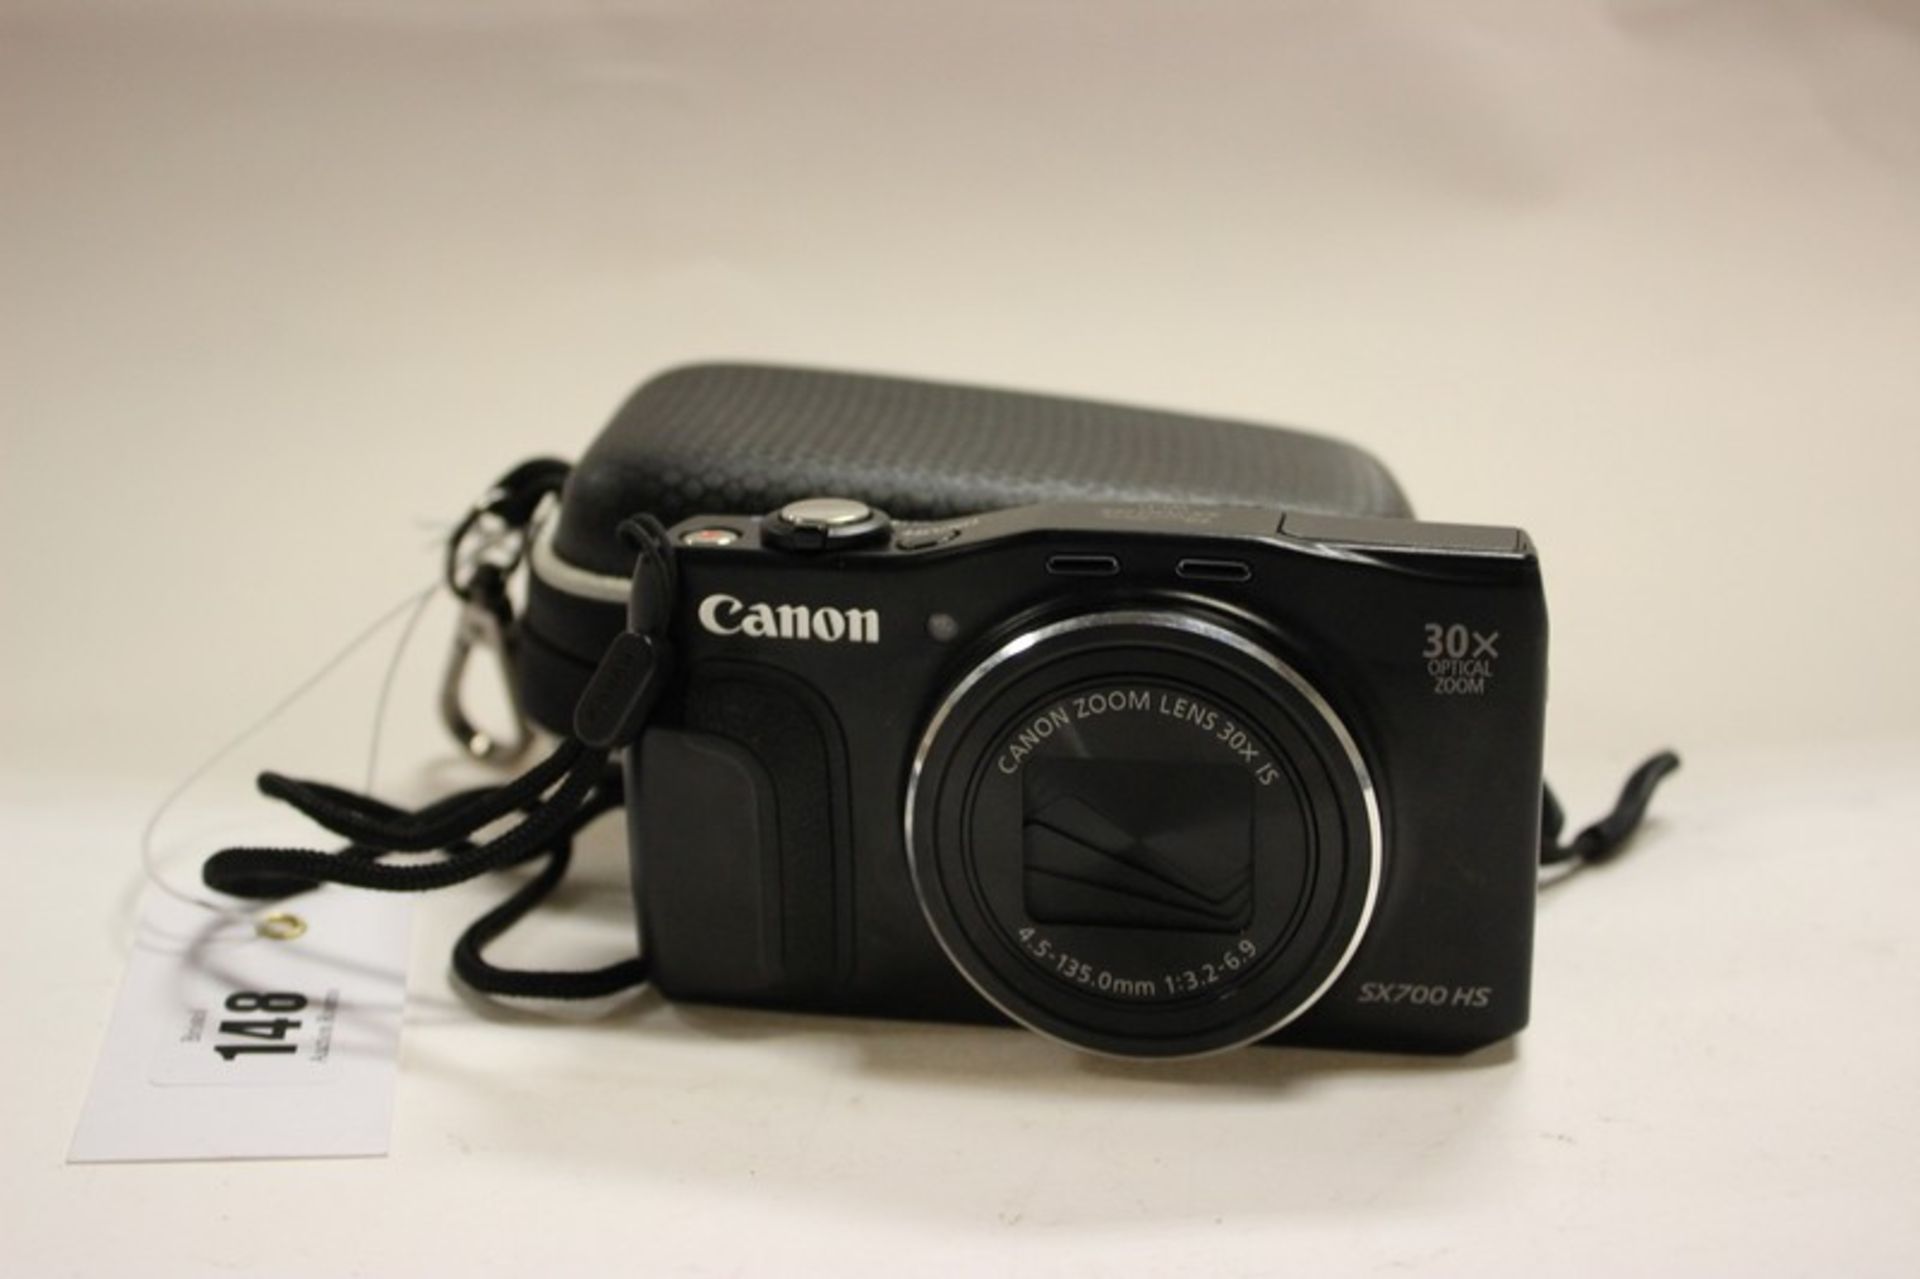 A Canon SX700 HS camera in case.